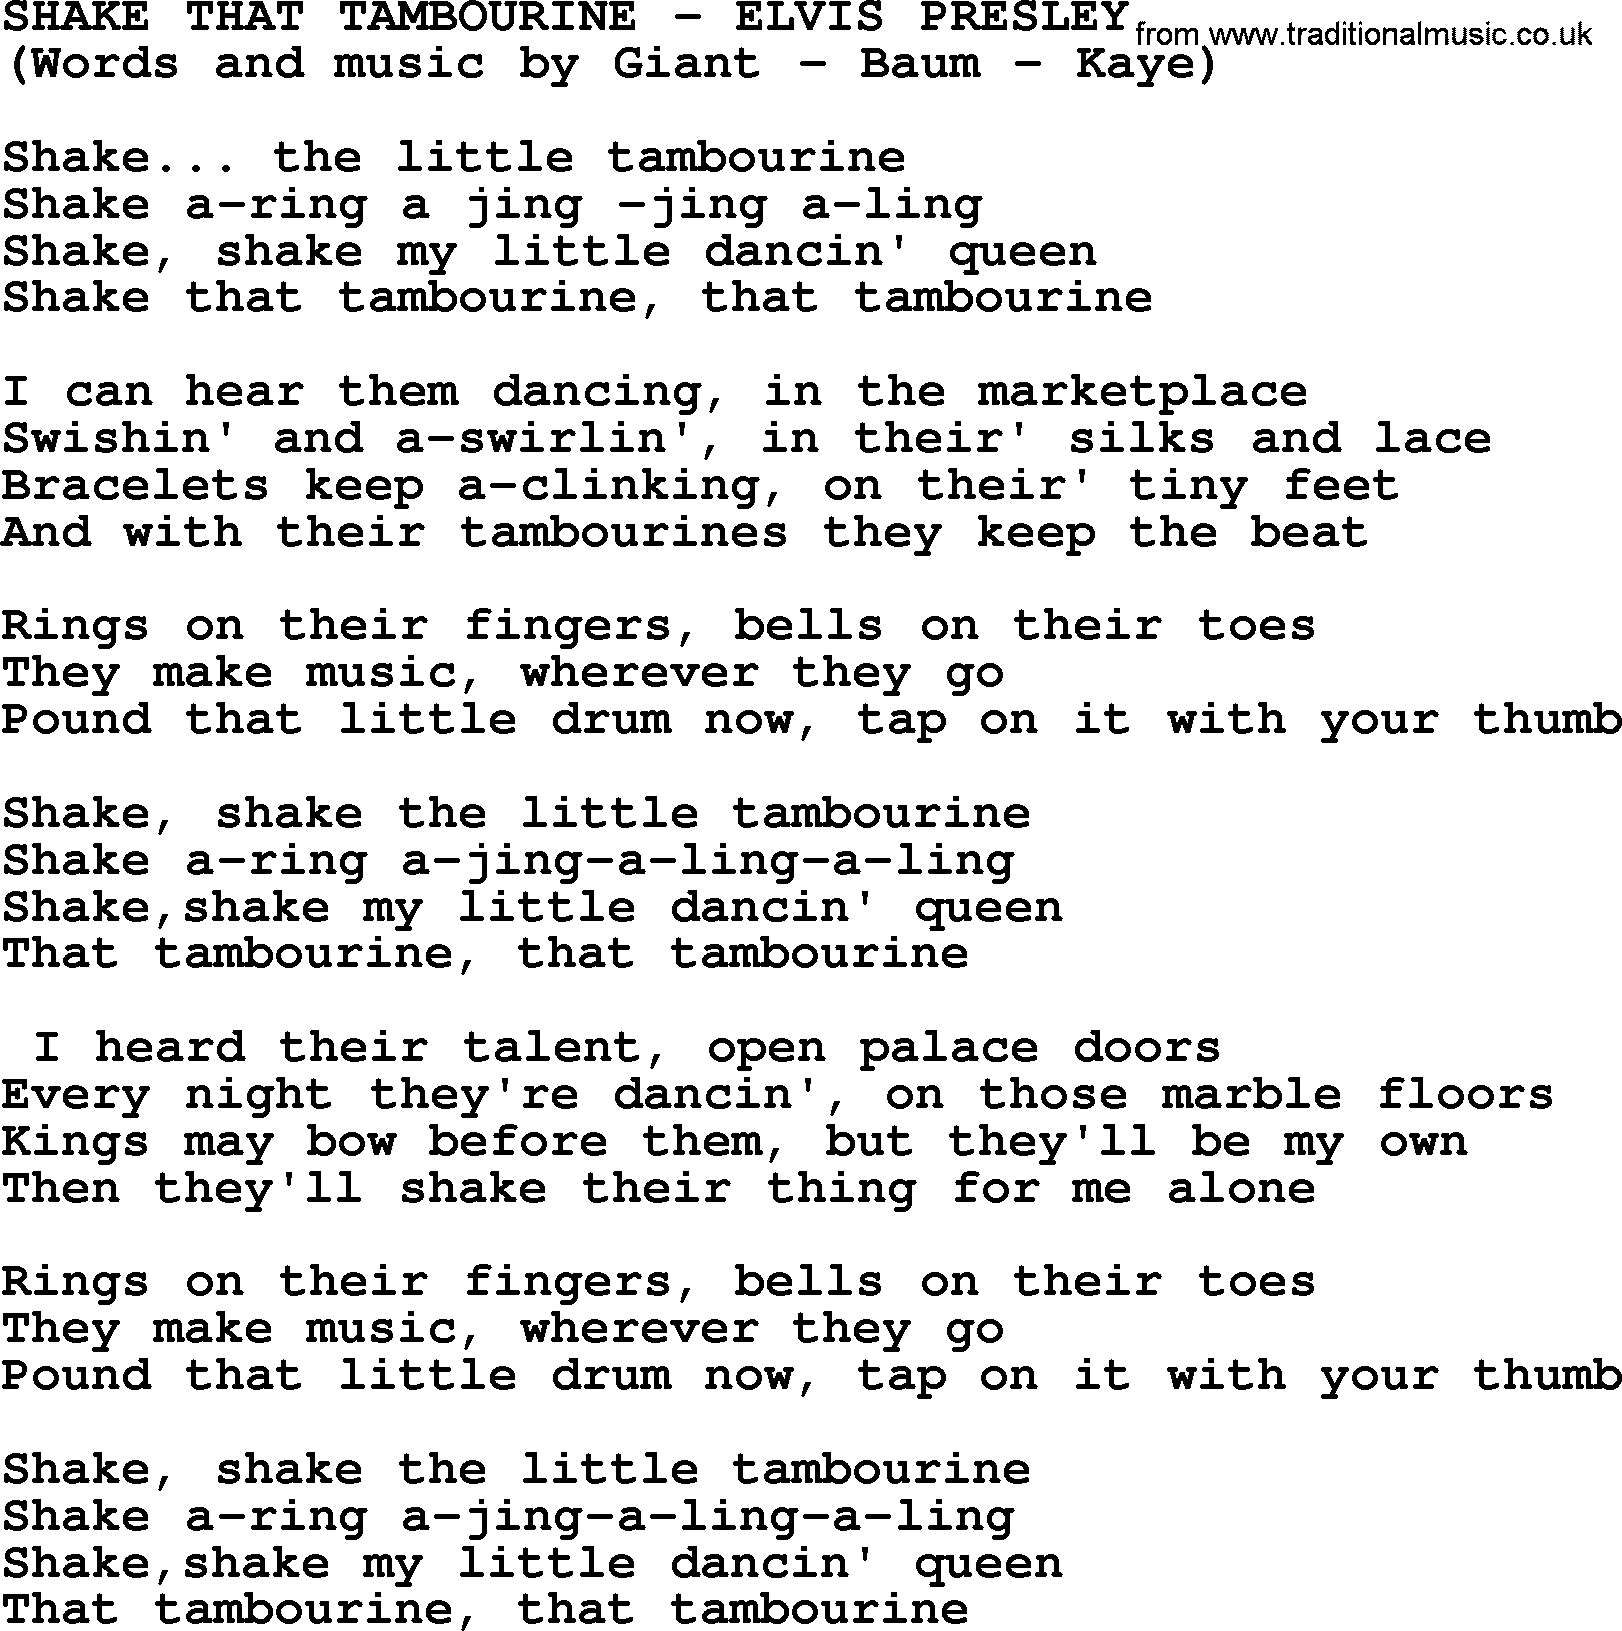 Elvis Presley song: Shake That Tambourine lyrics